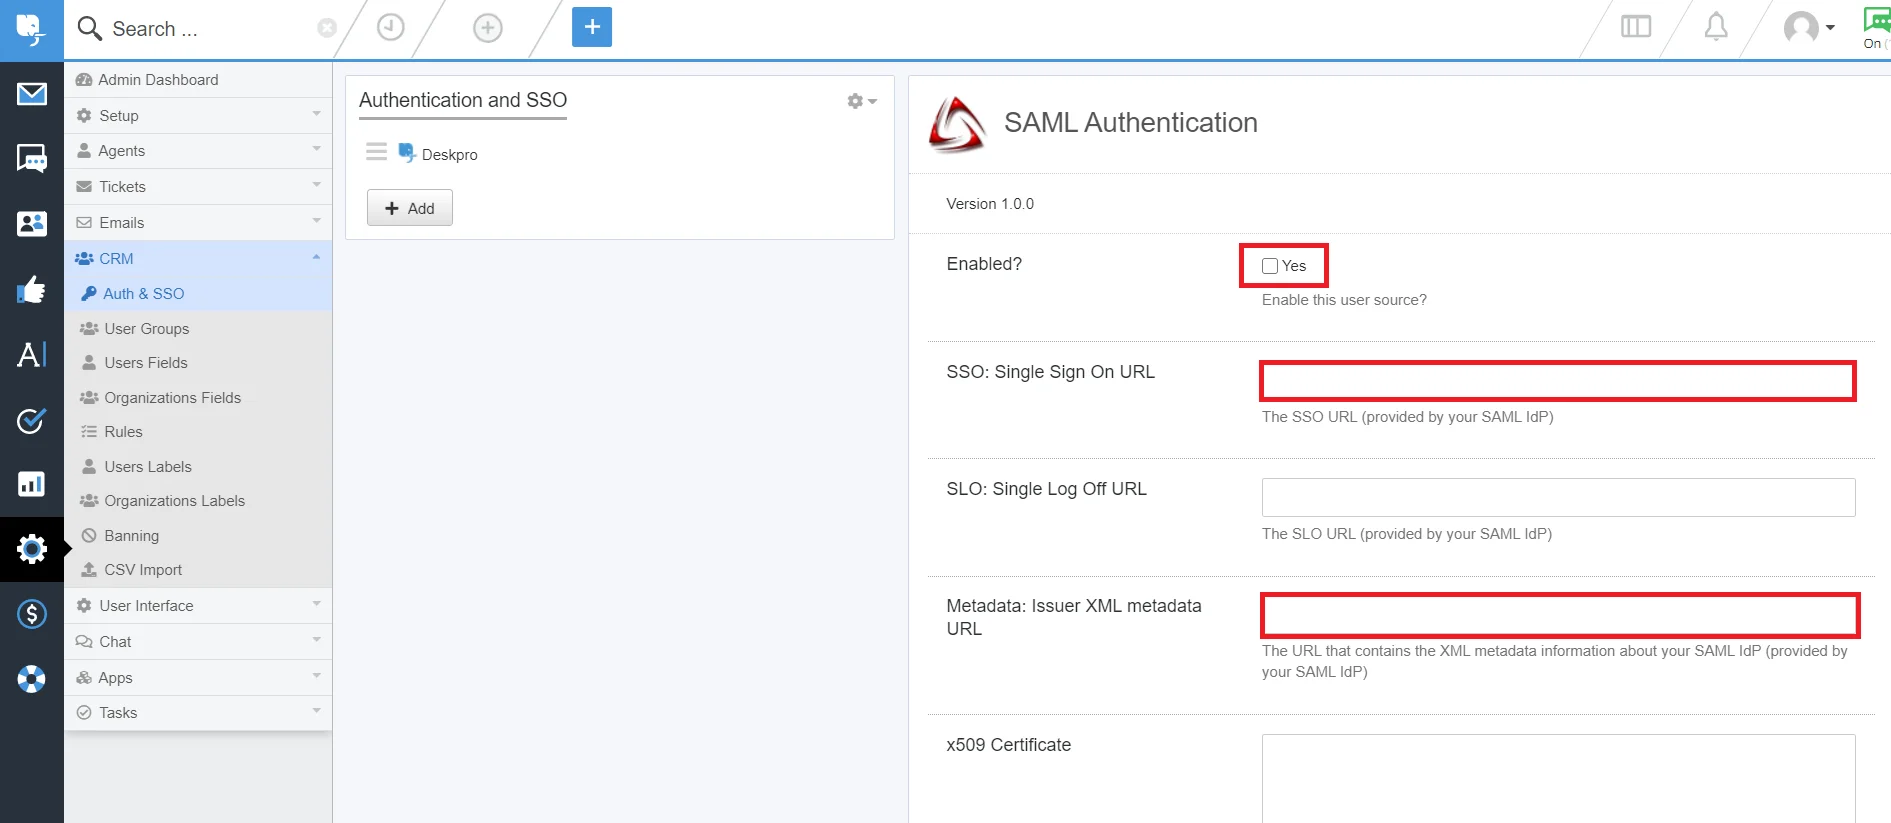 Deskpro SAML SSO integration using Joomla as Identity Provider